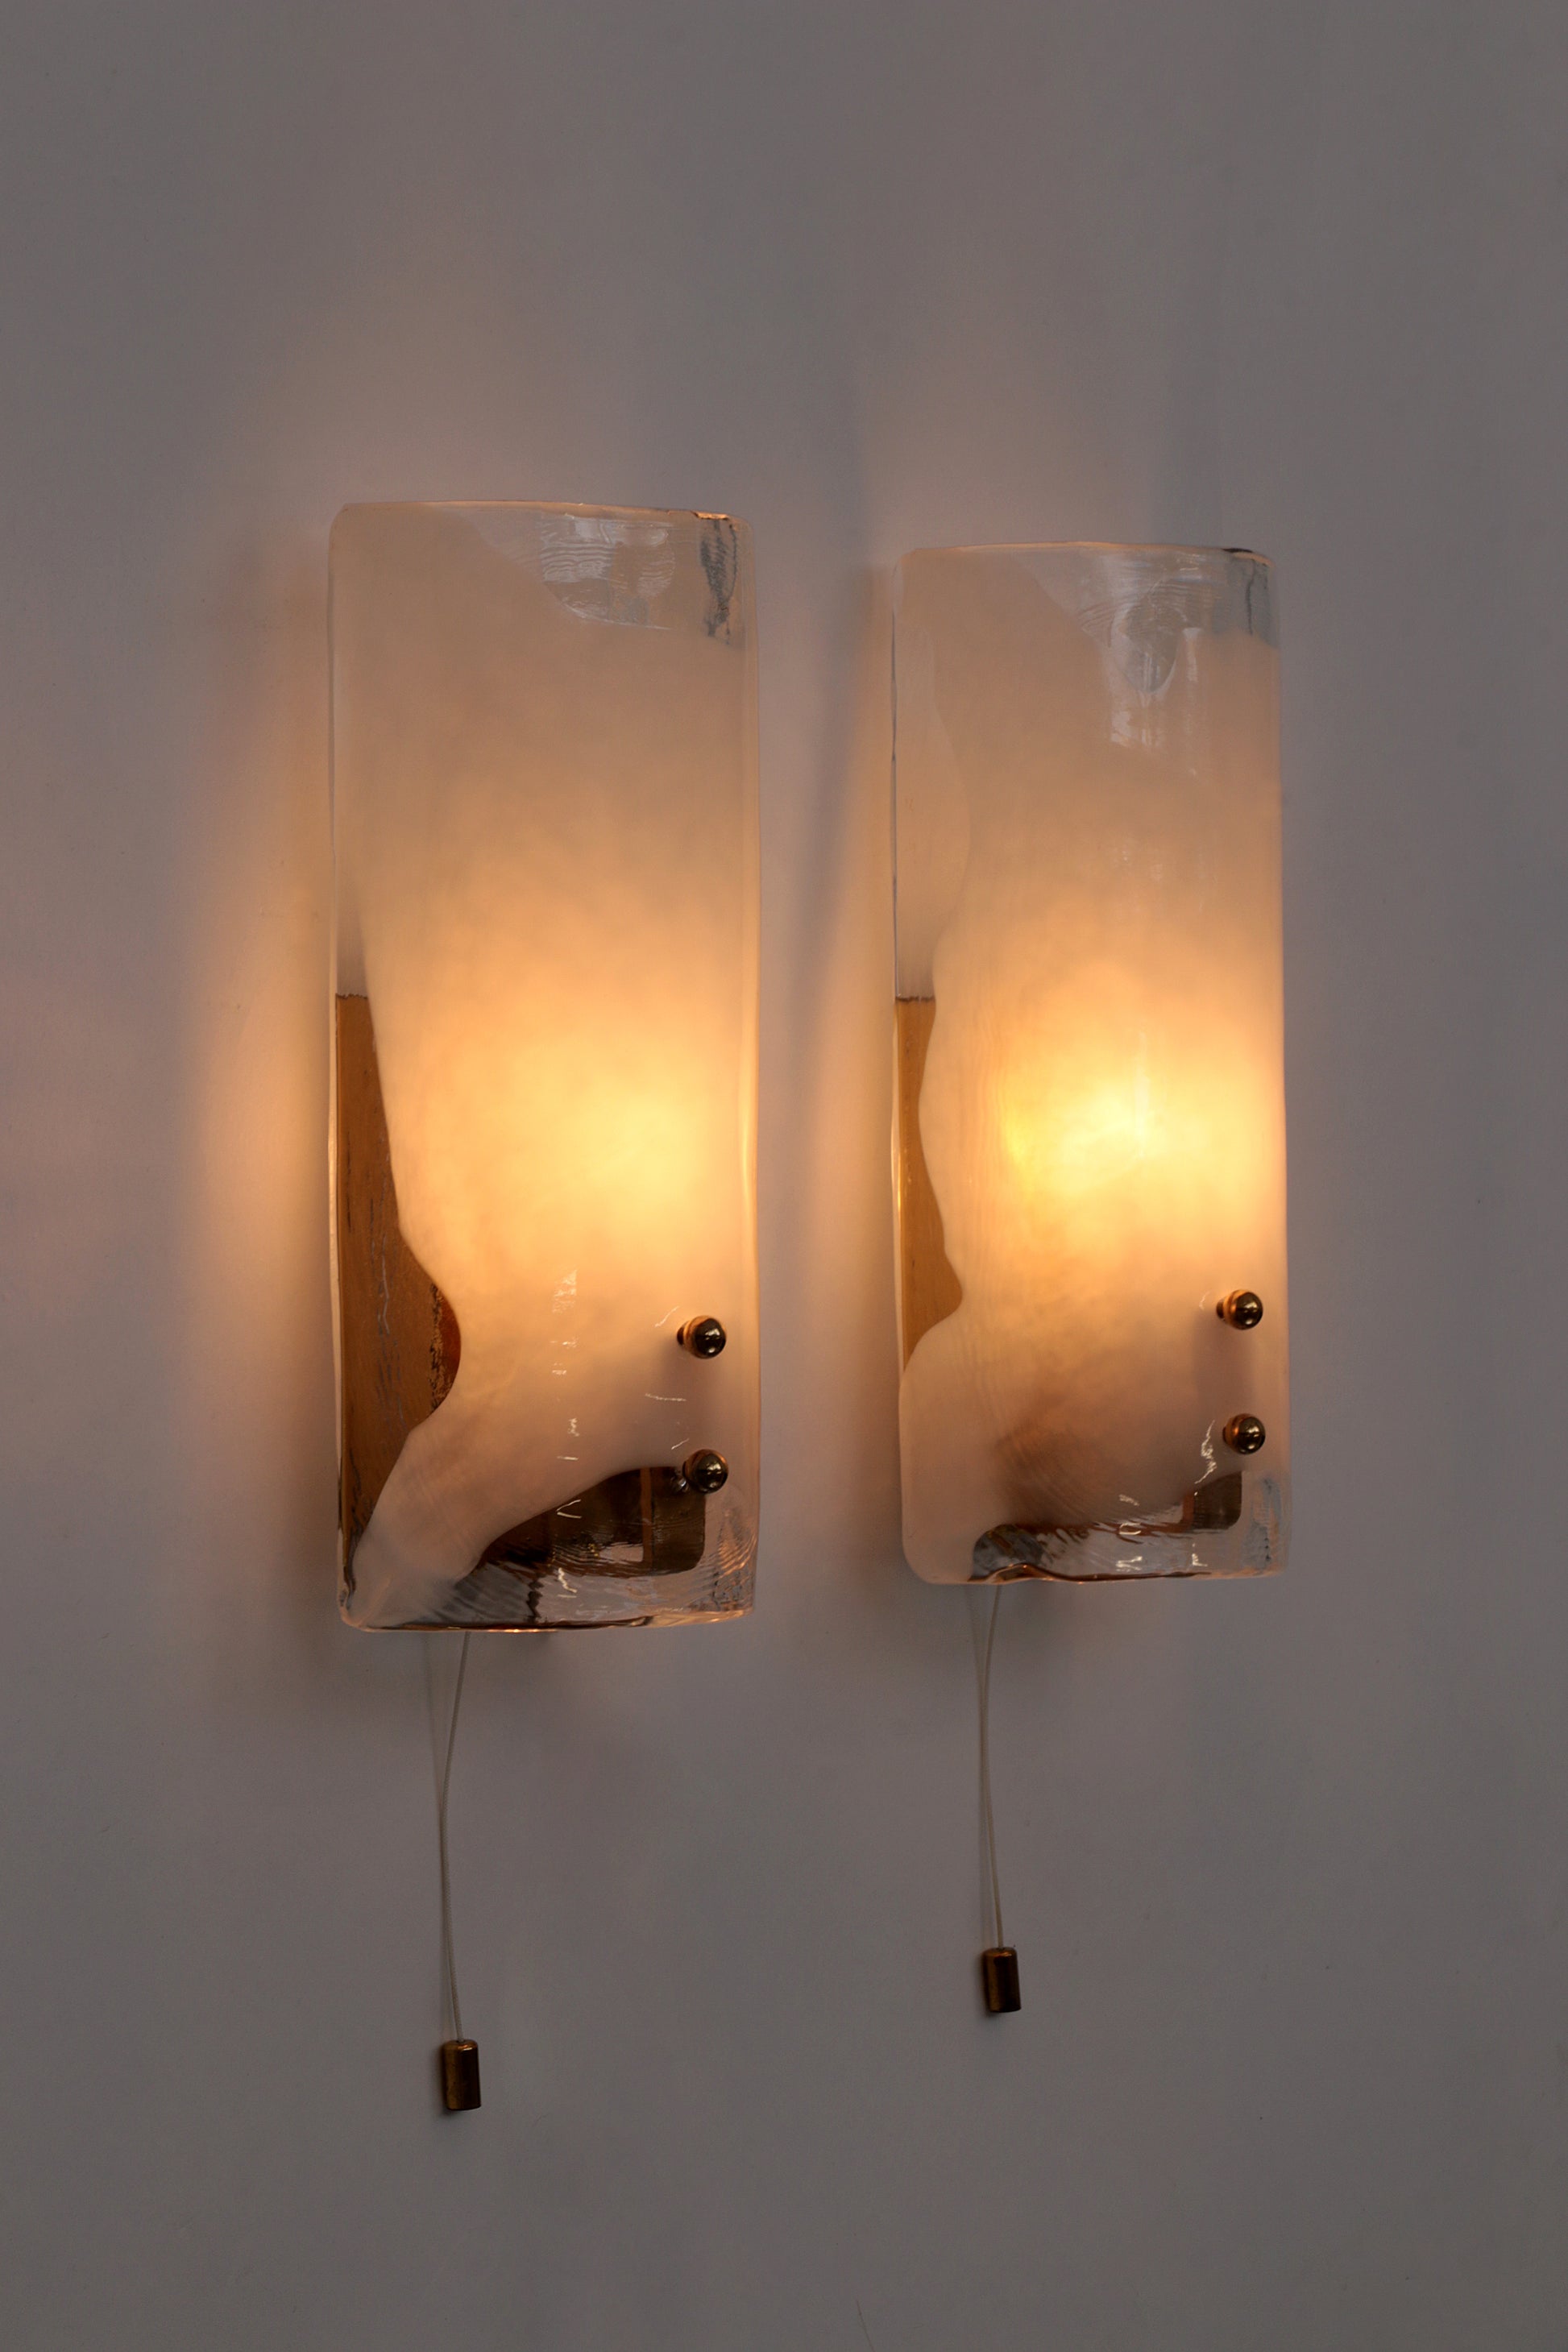 Design Kalmar glazen wandlampjes set met messing details